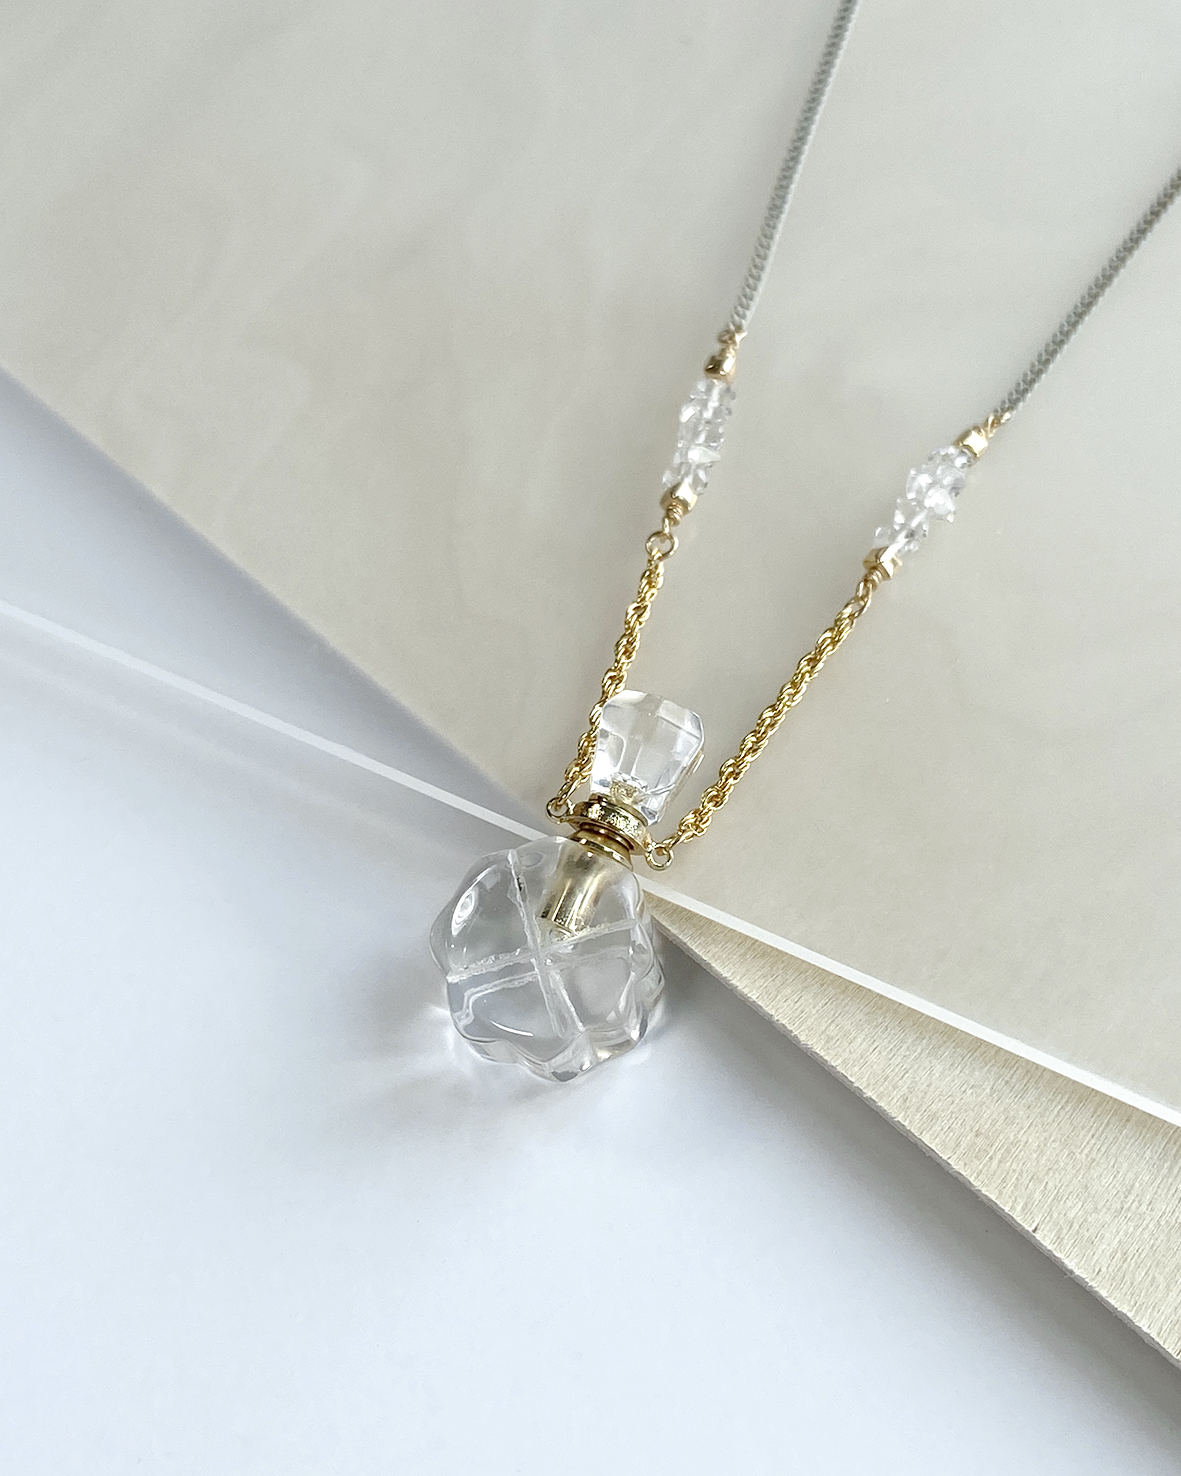 clover shaped clear quartz crystal bottle necklace